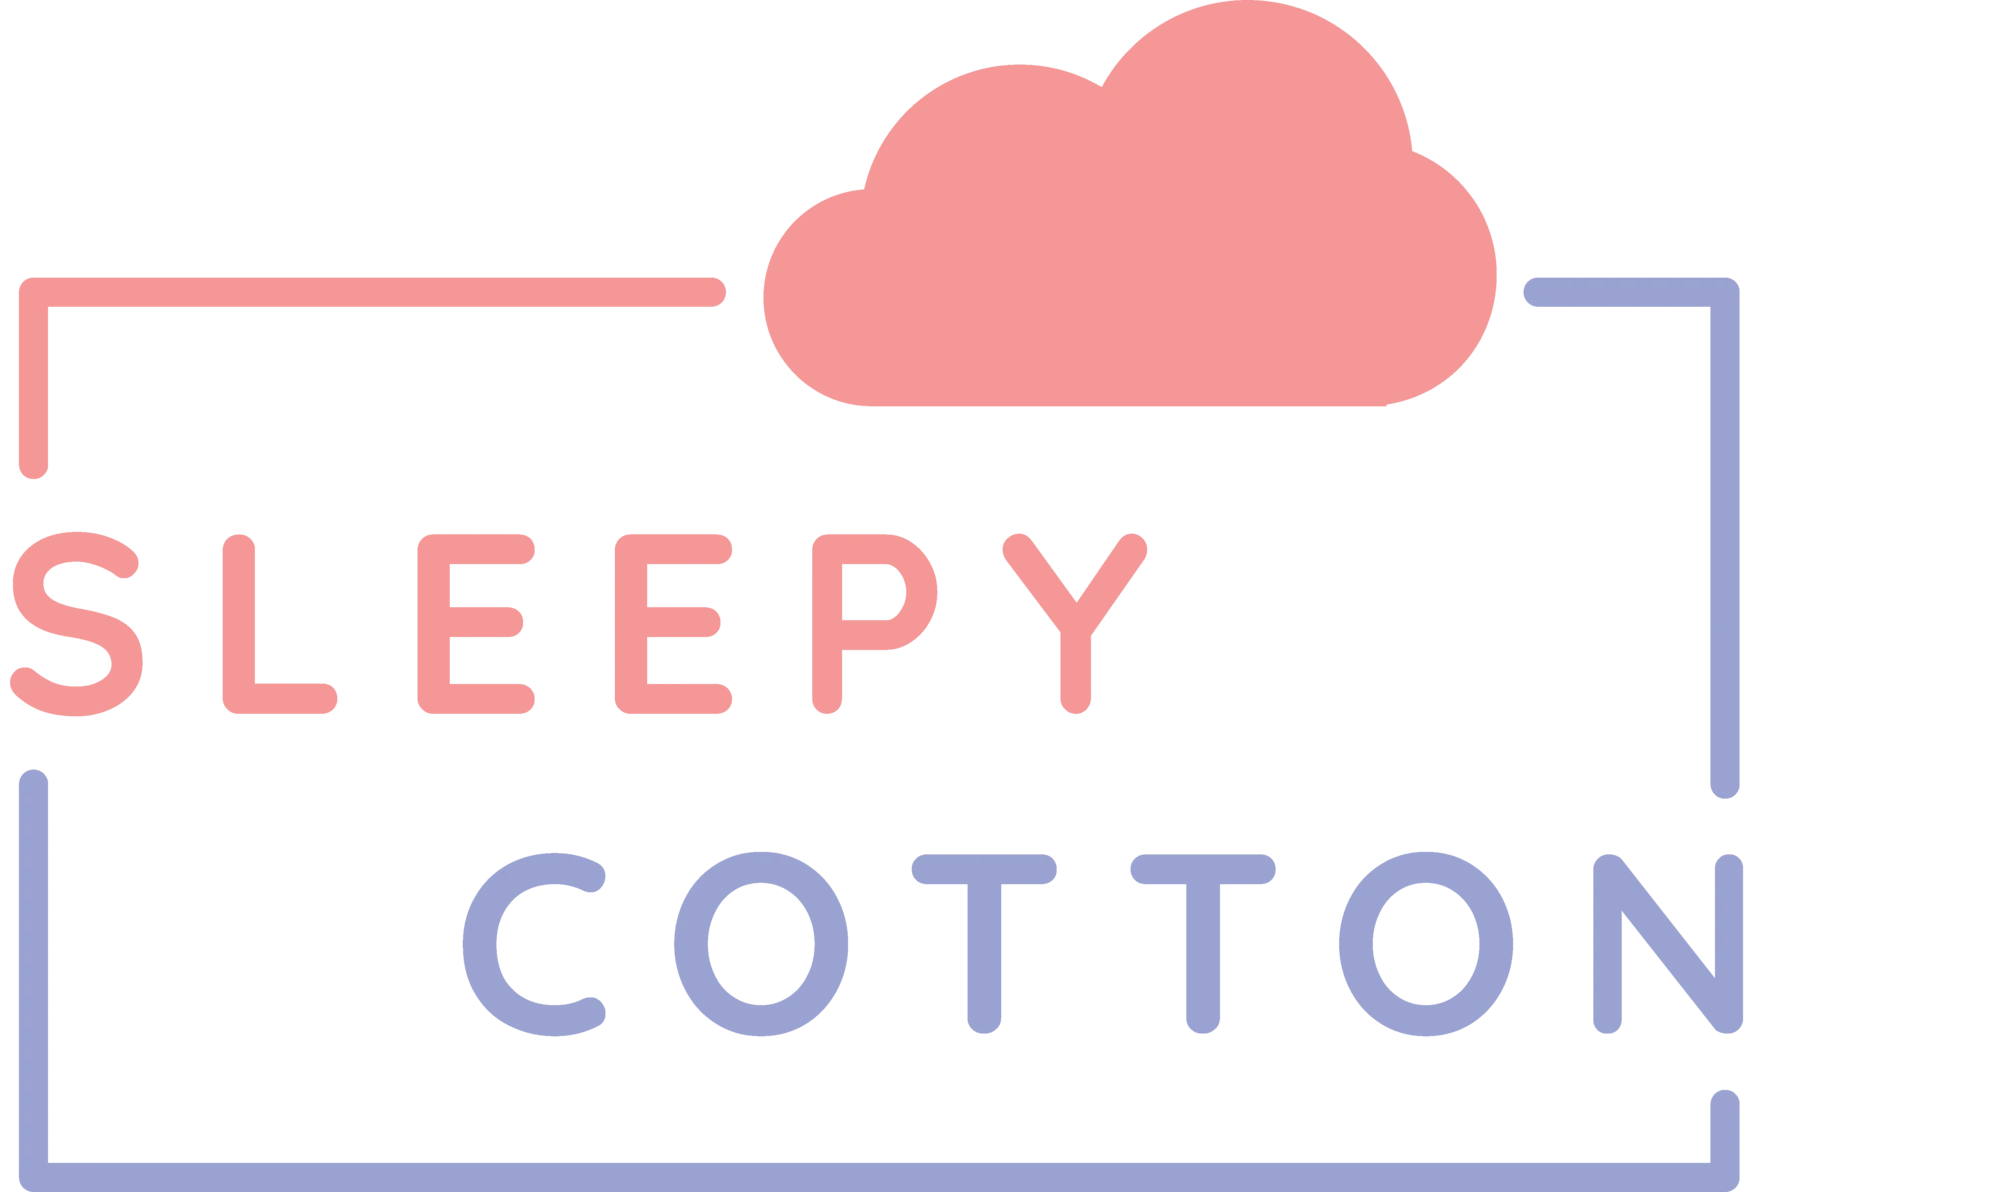 Sleepy Cotton Coupon Codes